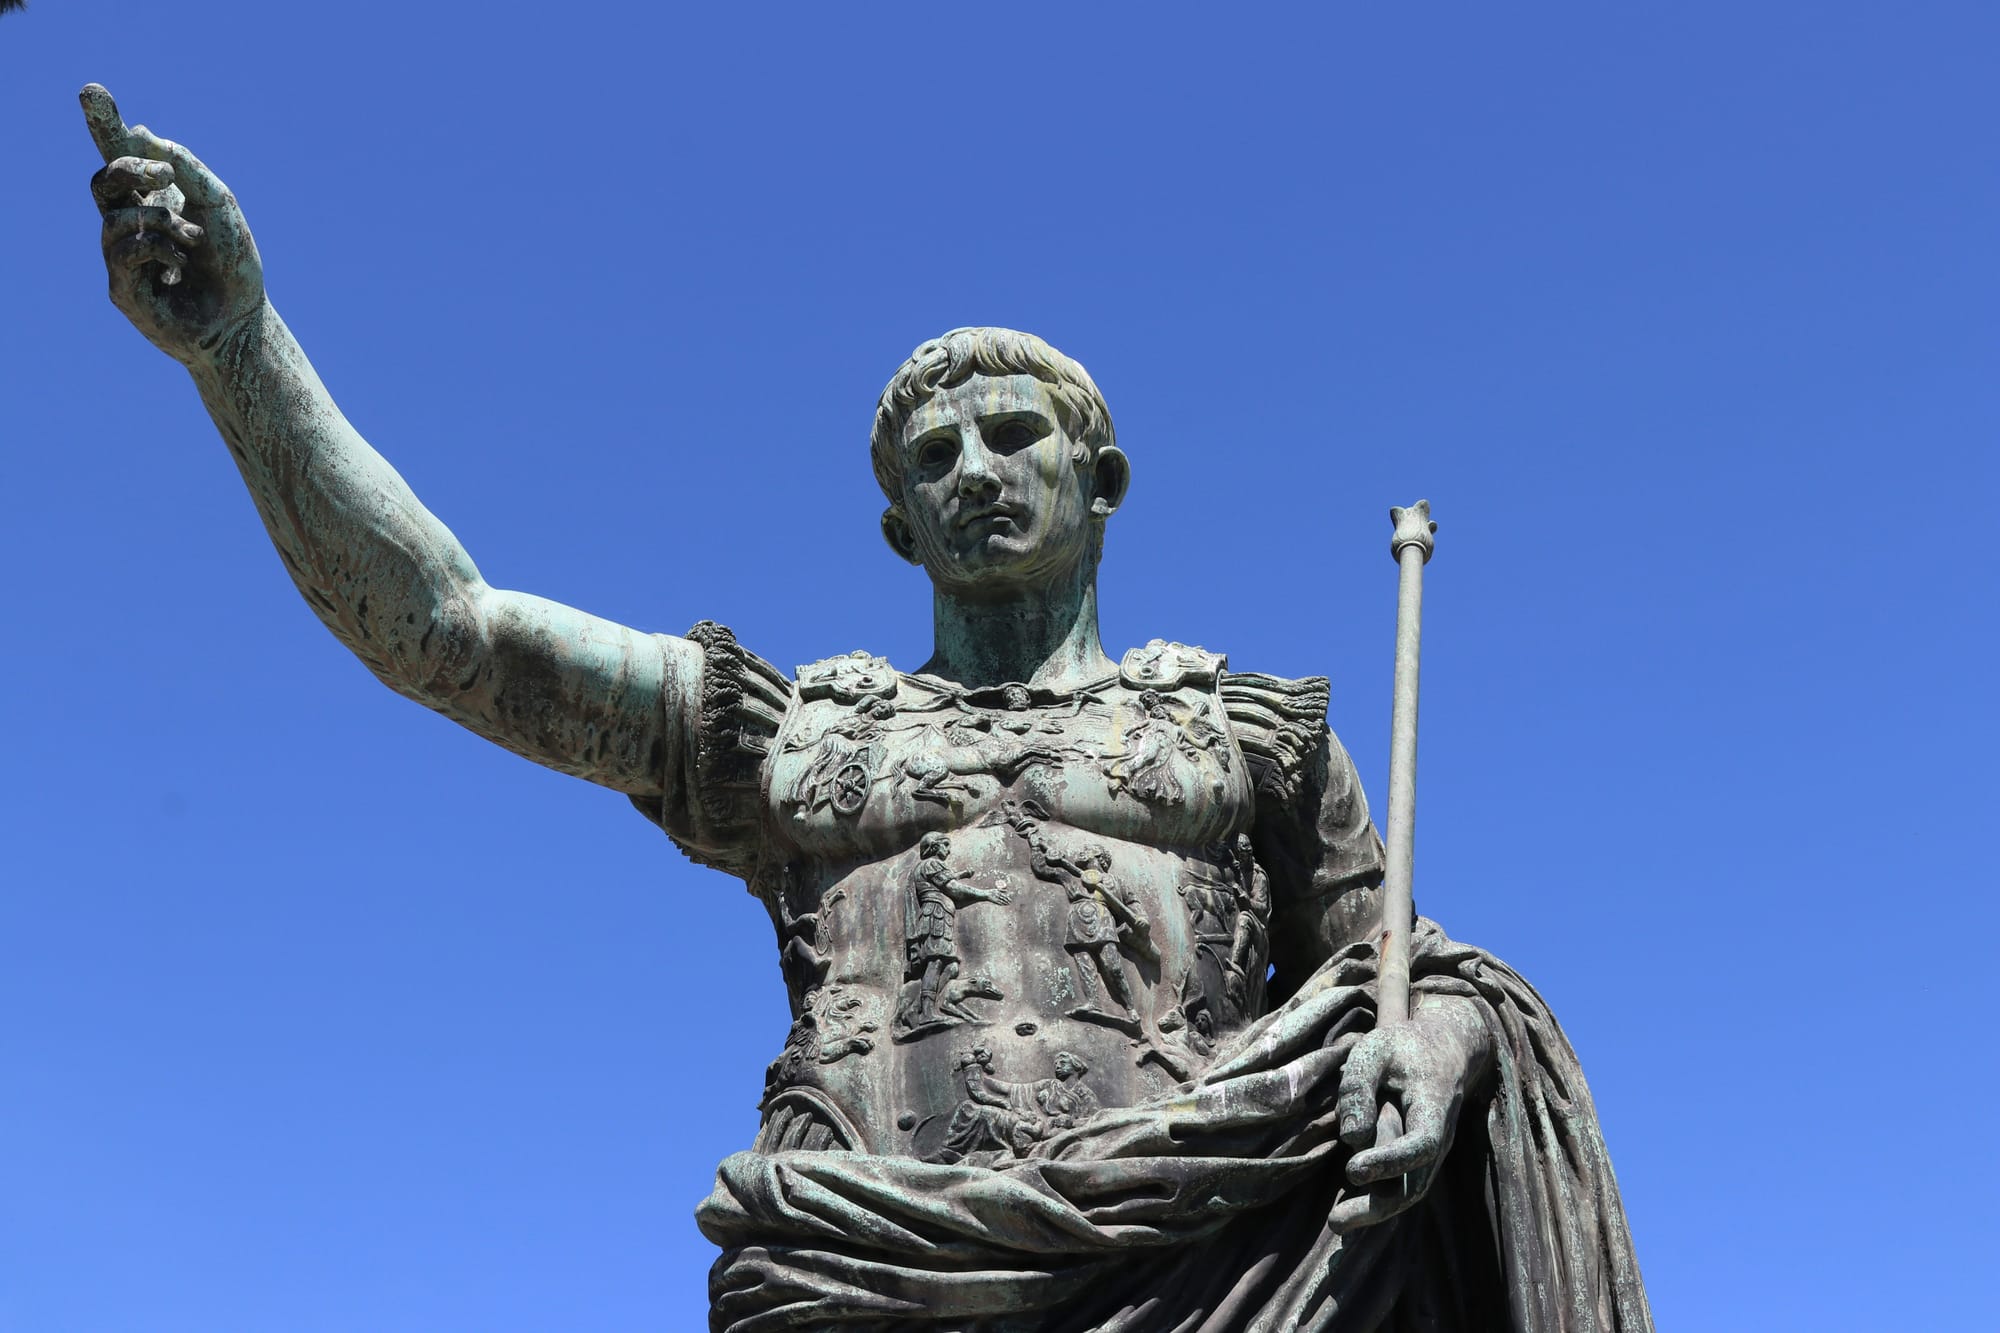 The Prima Portal statue of Emperor Augustus